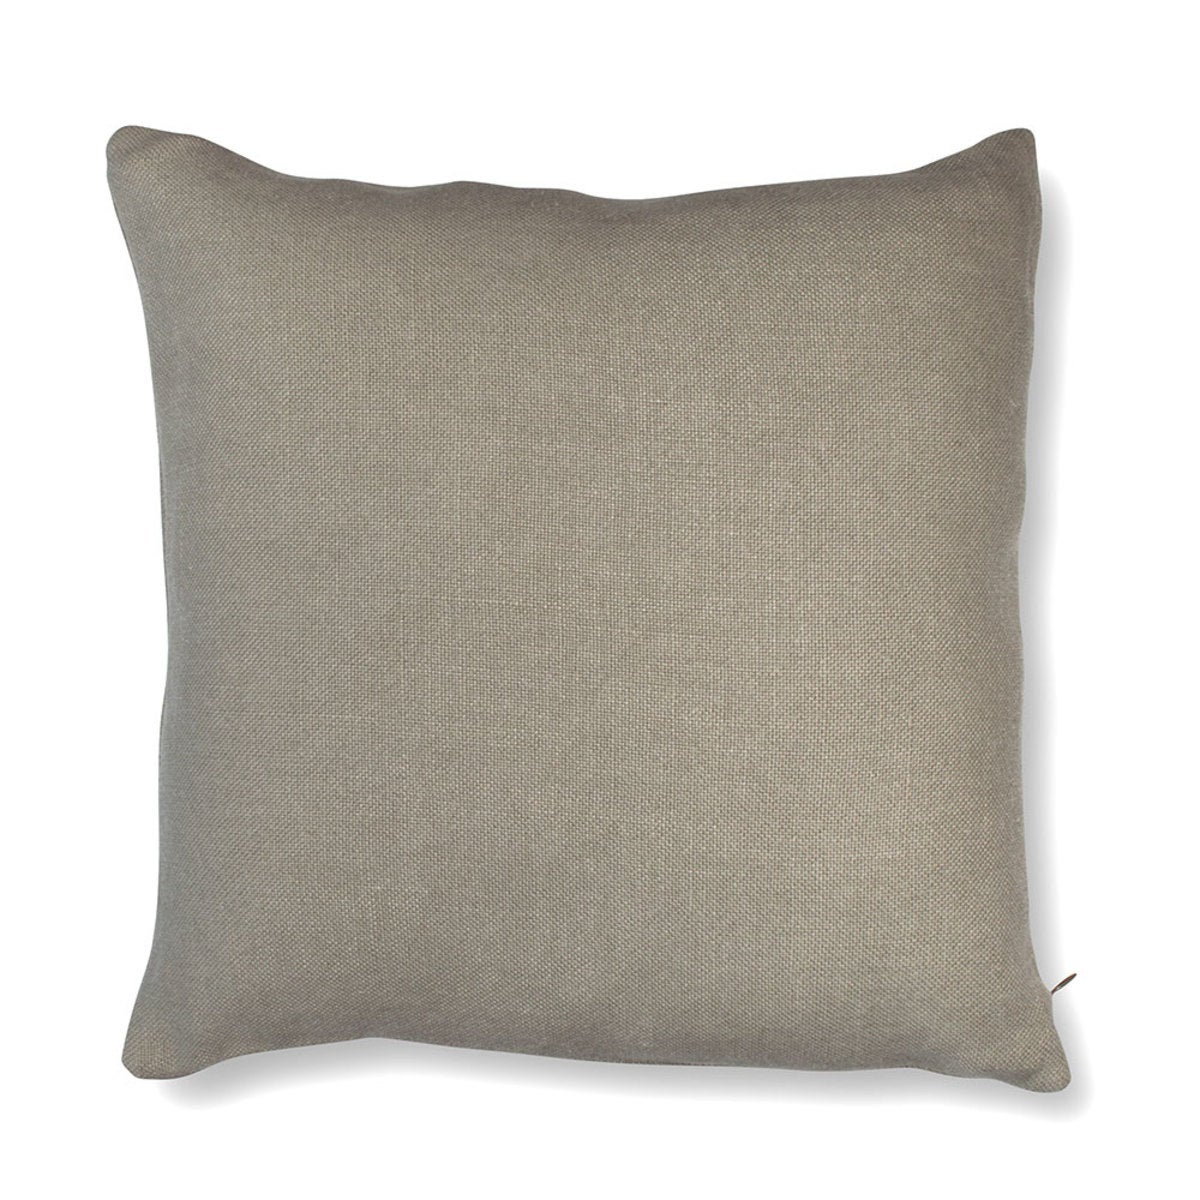 100% Pure Linen Pillow Cover 16" Square - Ash